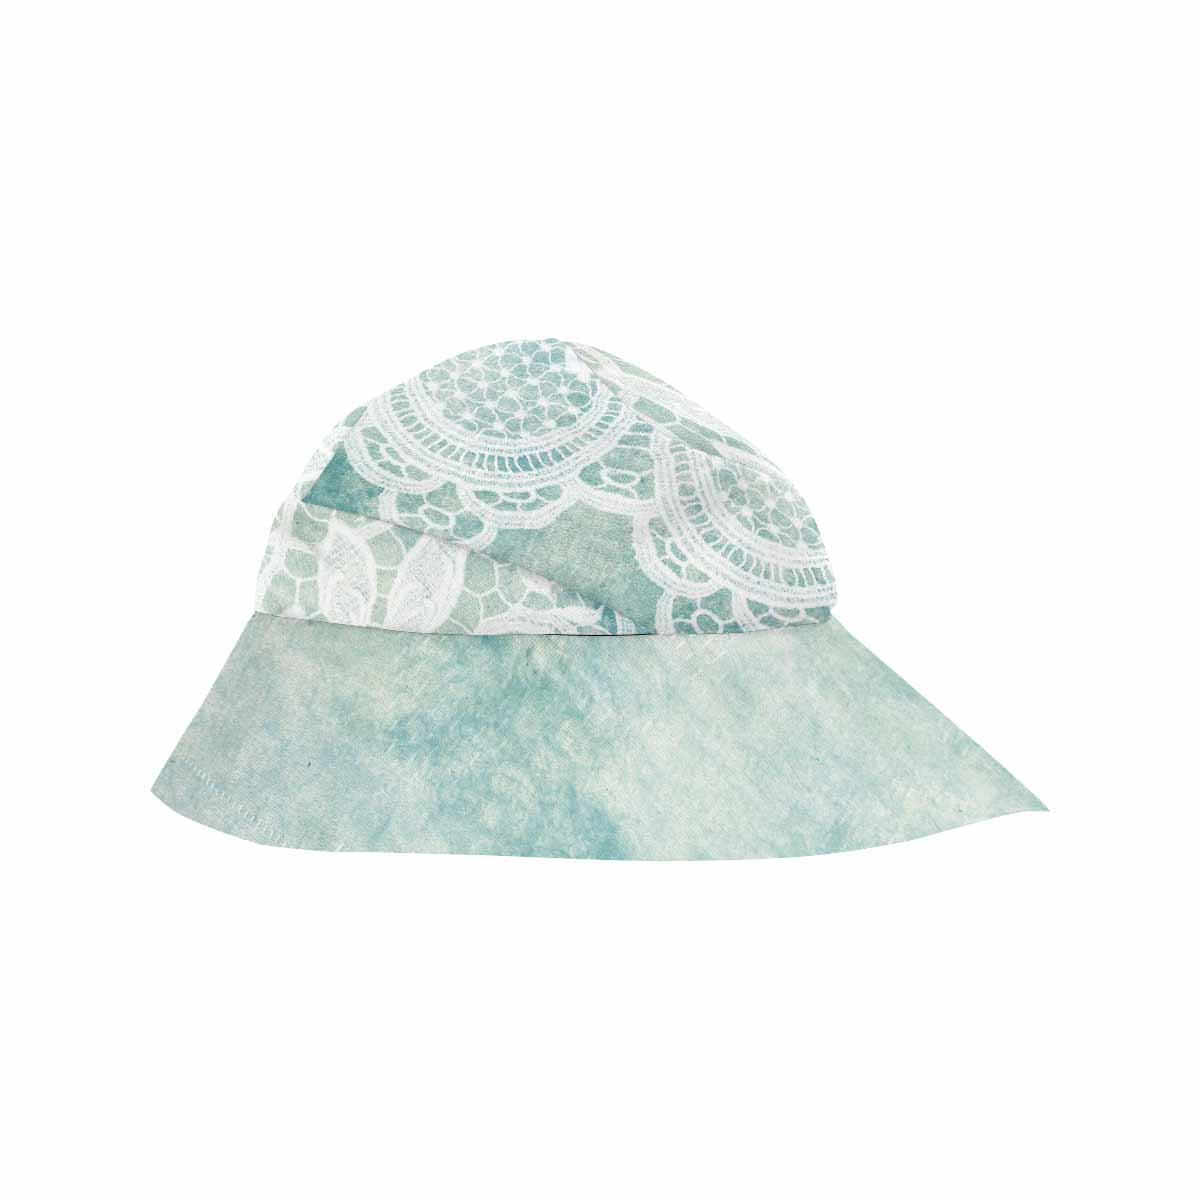 Victorian lace print, wide brim sunvisor Hat, outdoors hat, design 41